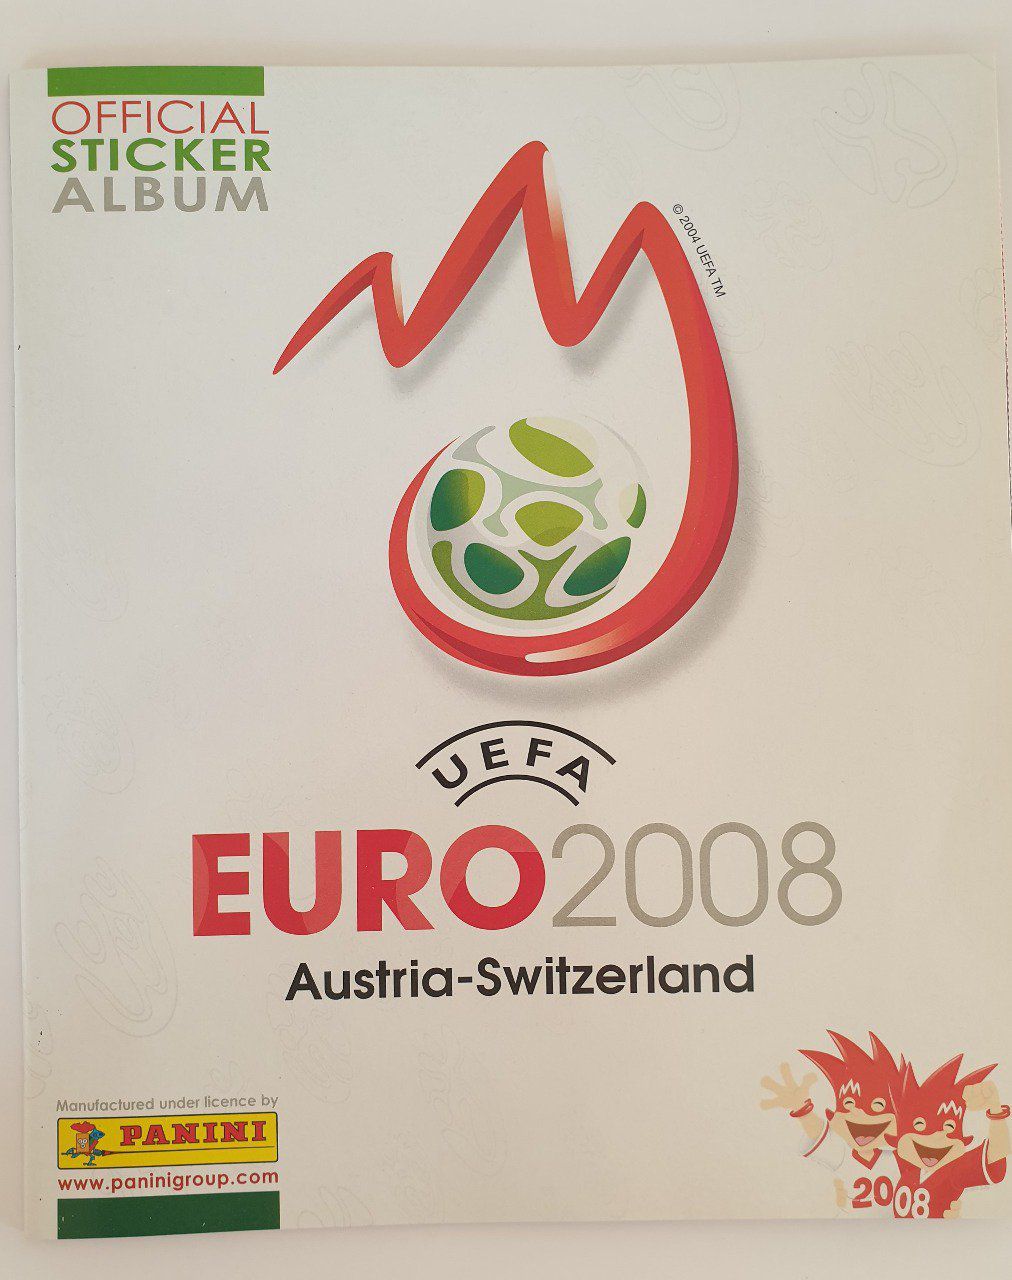 Euro 2008 images a la pièces version International (italy )